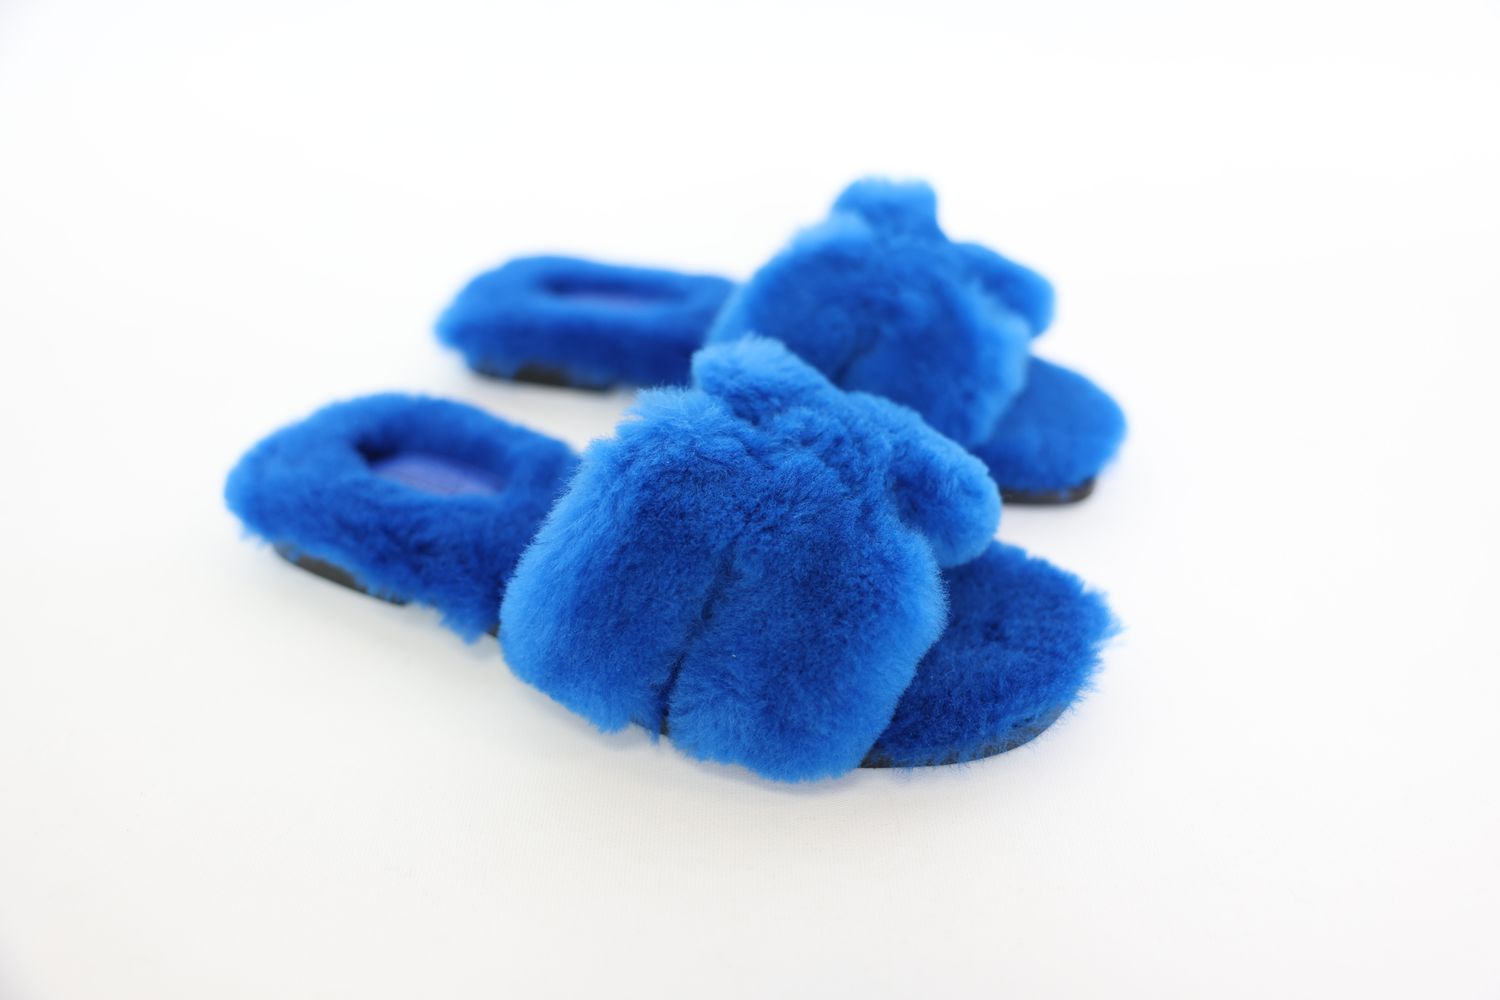 Hermes Oran Slide Sandals, Blue Fur, Size 36, New in Box WA001